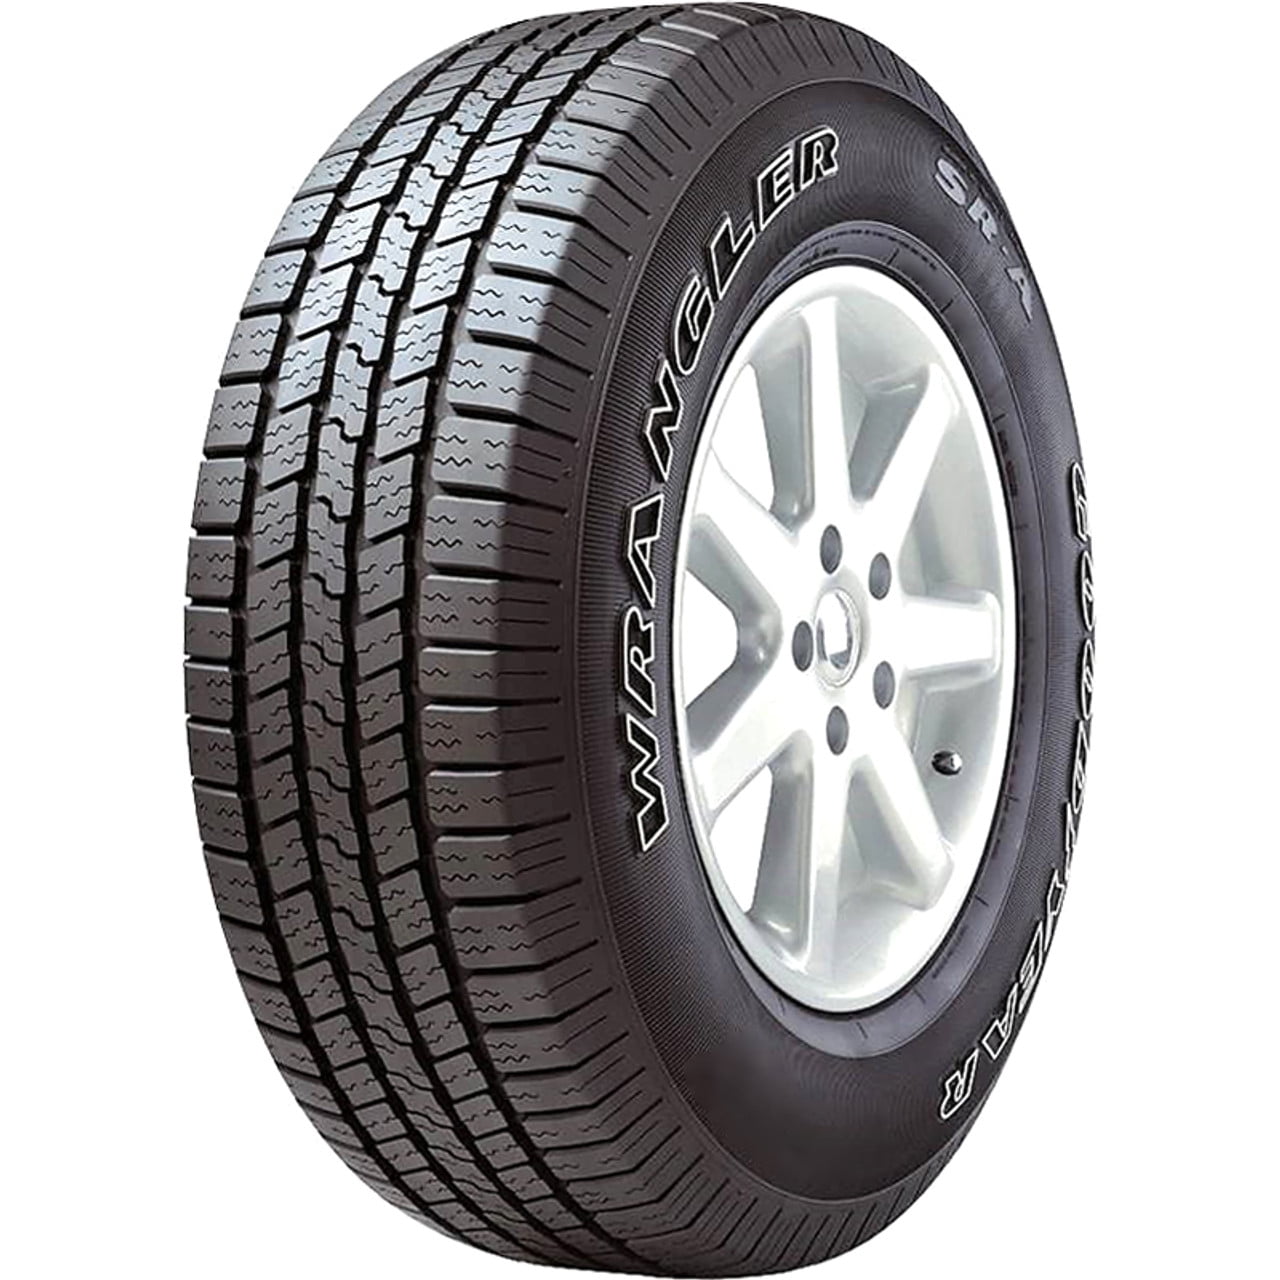 Pair Of 2 Goodyear Wrangler SR A All-Season Tires - 275/60R20 114S - Walmart .com